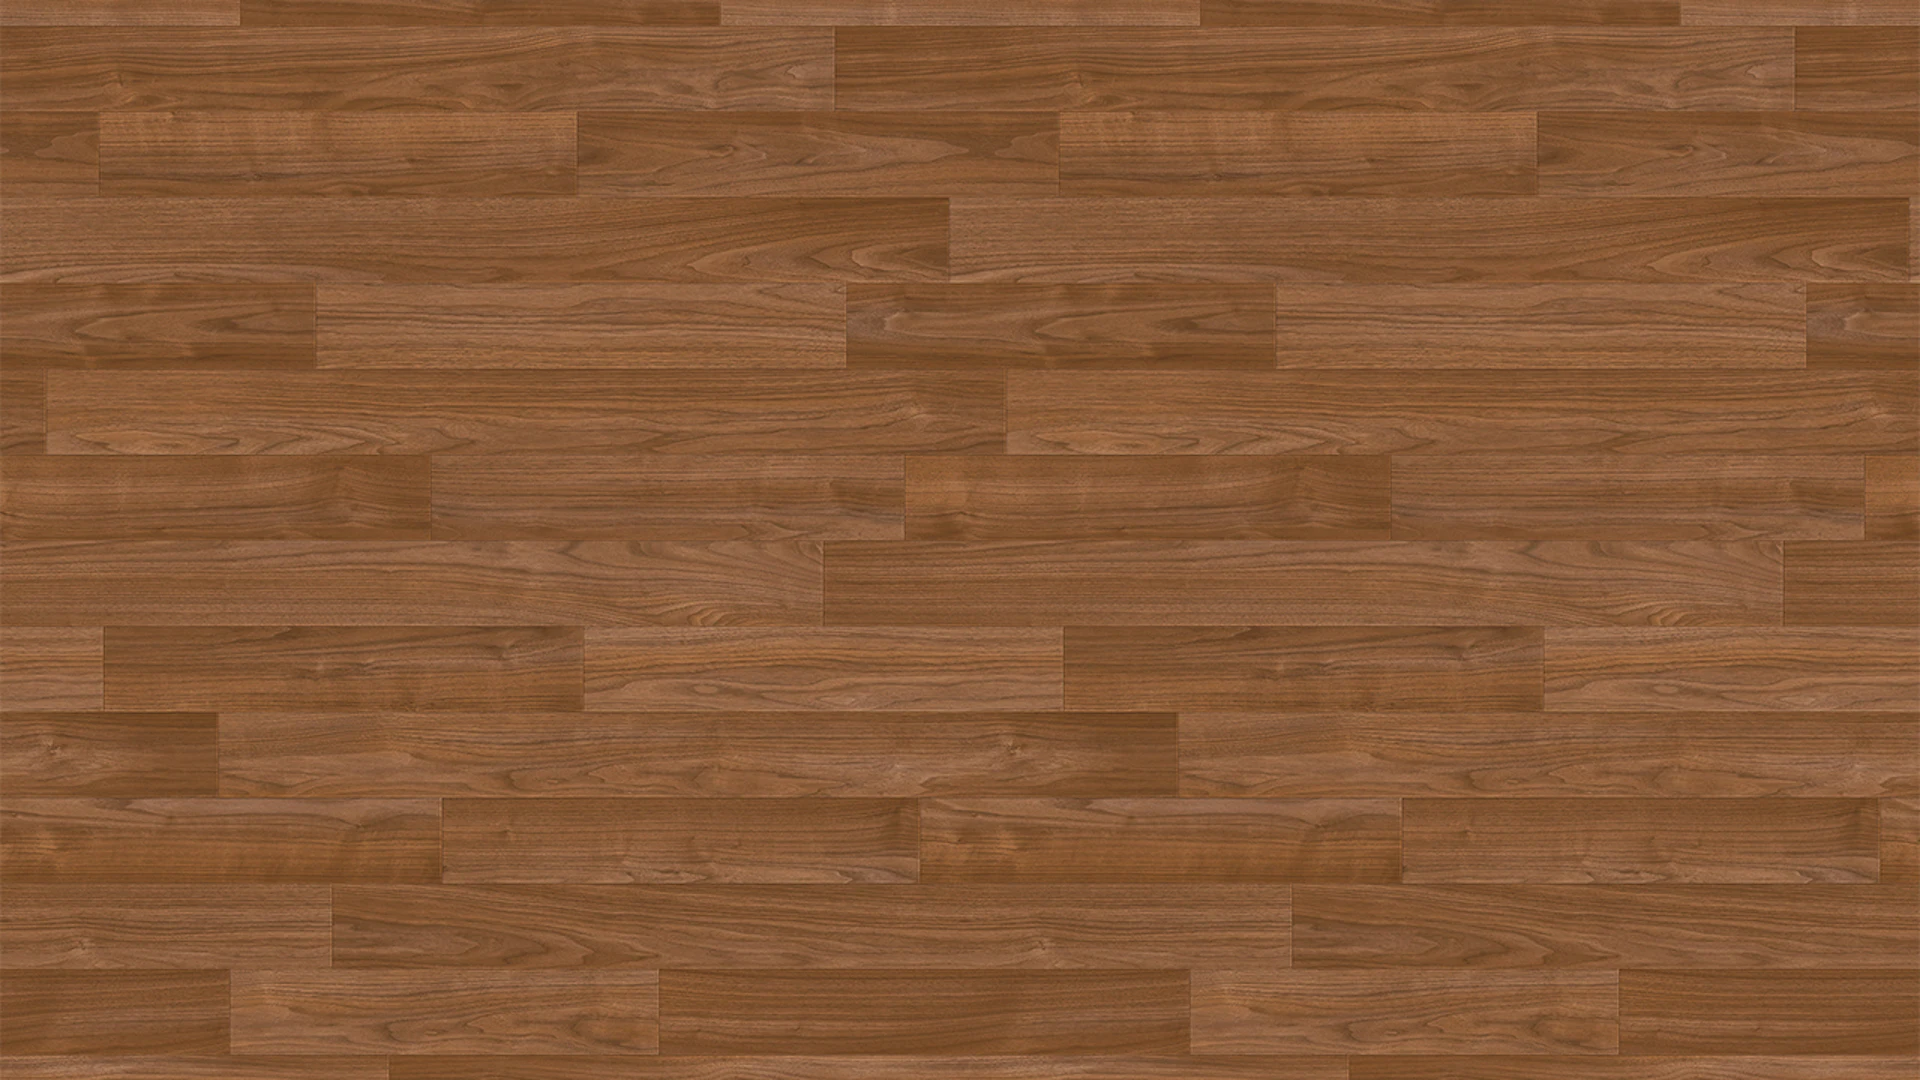 Wineo Sol écologique - PURLINE 1500 Wood Napa Walnut Rust (PLR388C)